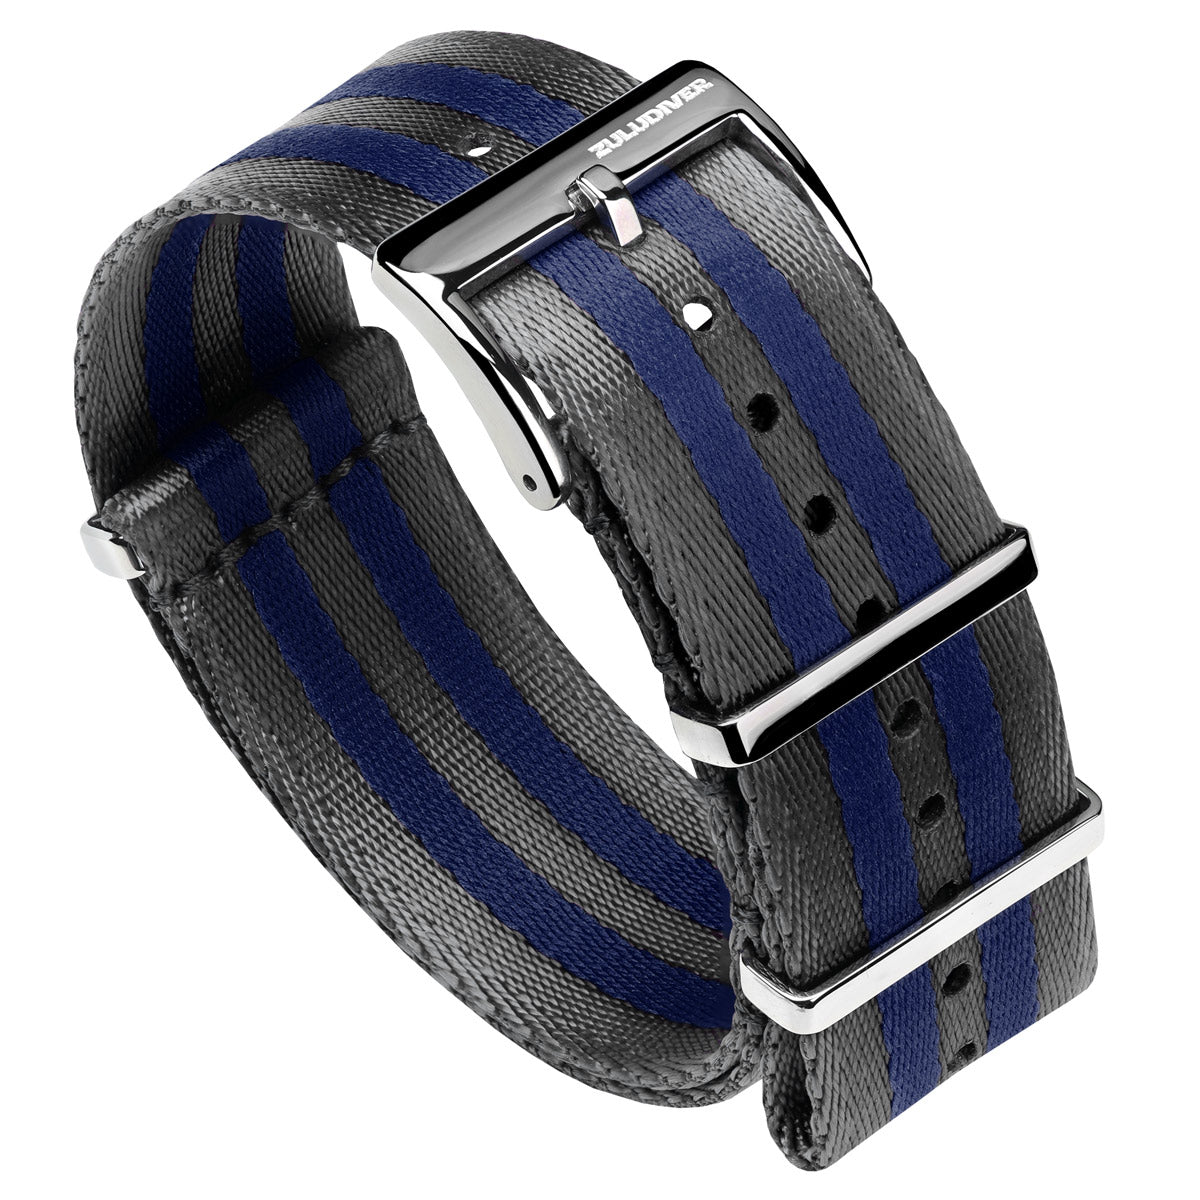 Premium NATO watch straps, seat belt nylon material, Blue/Grey stripe white background image